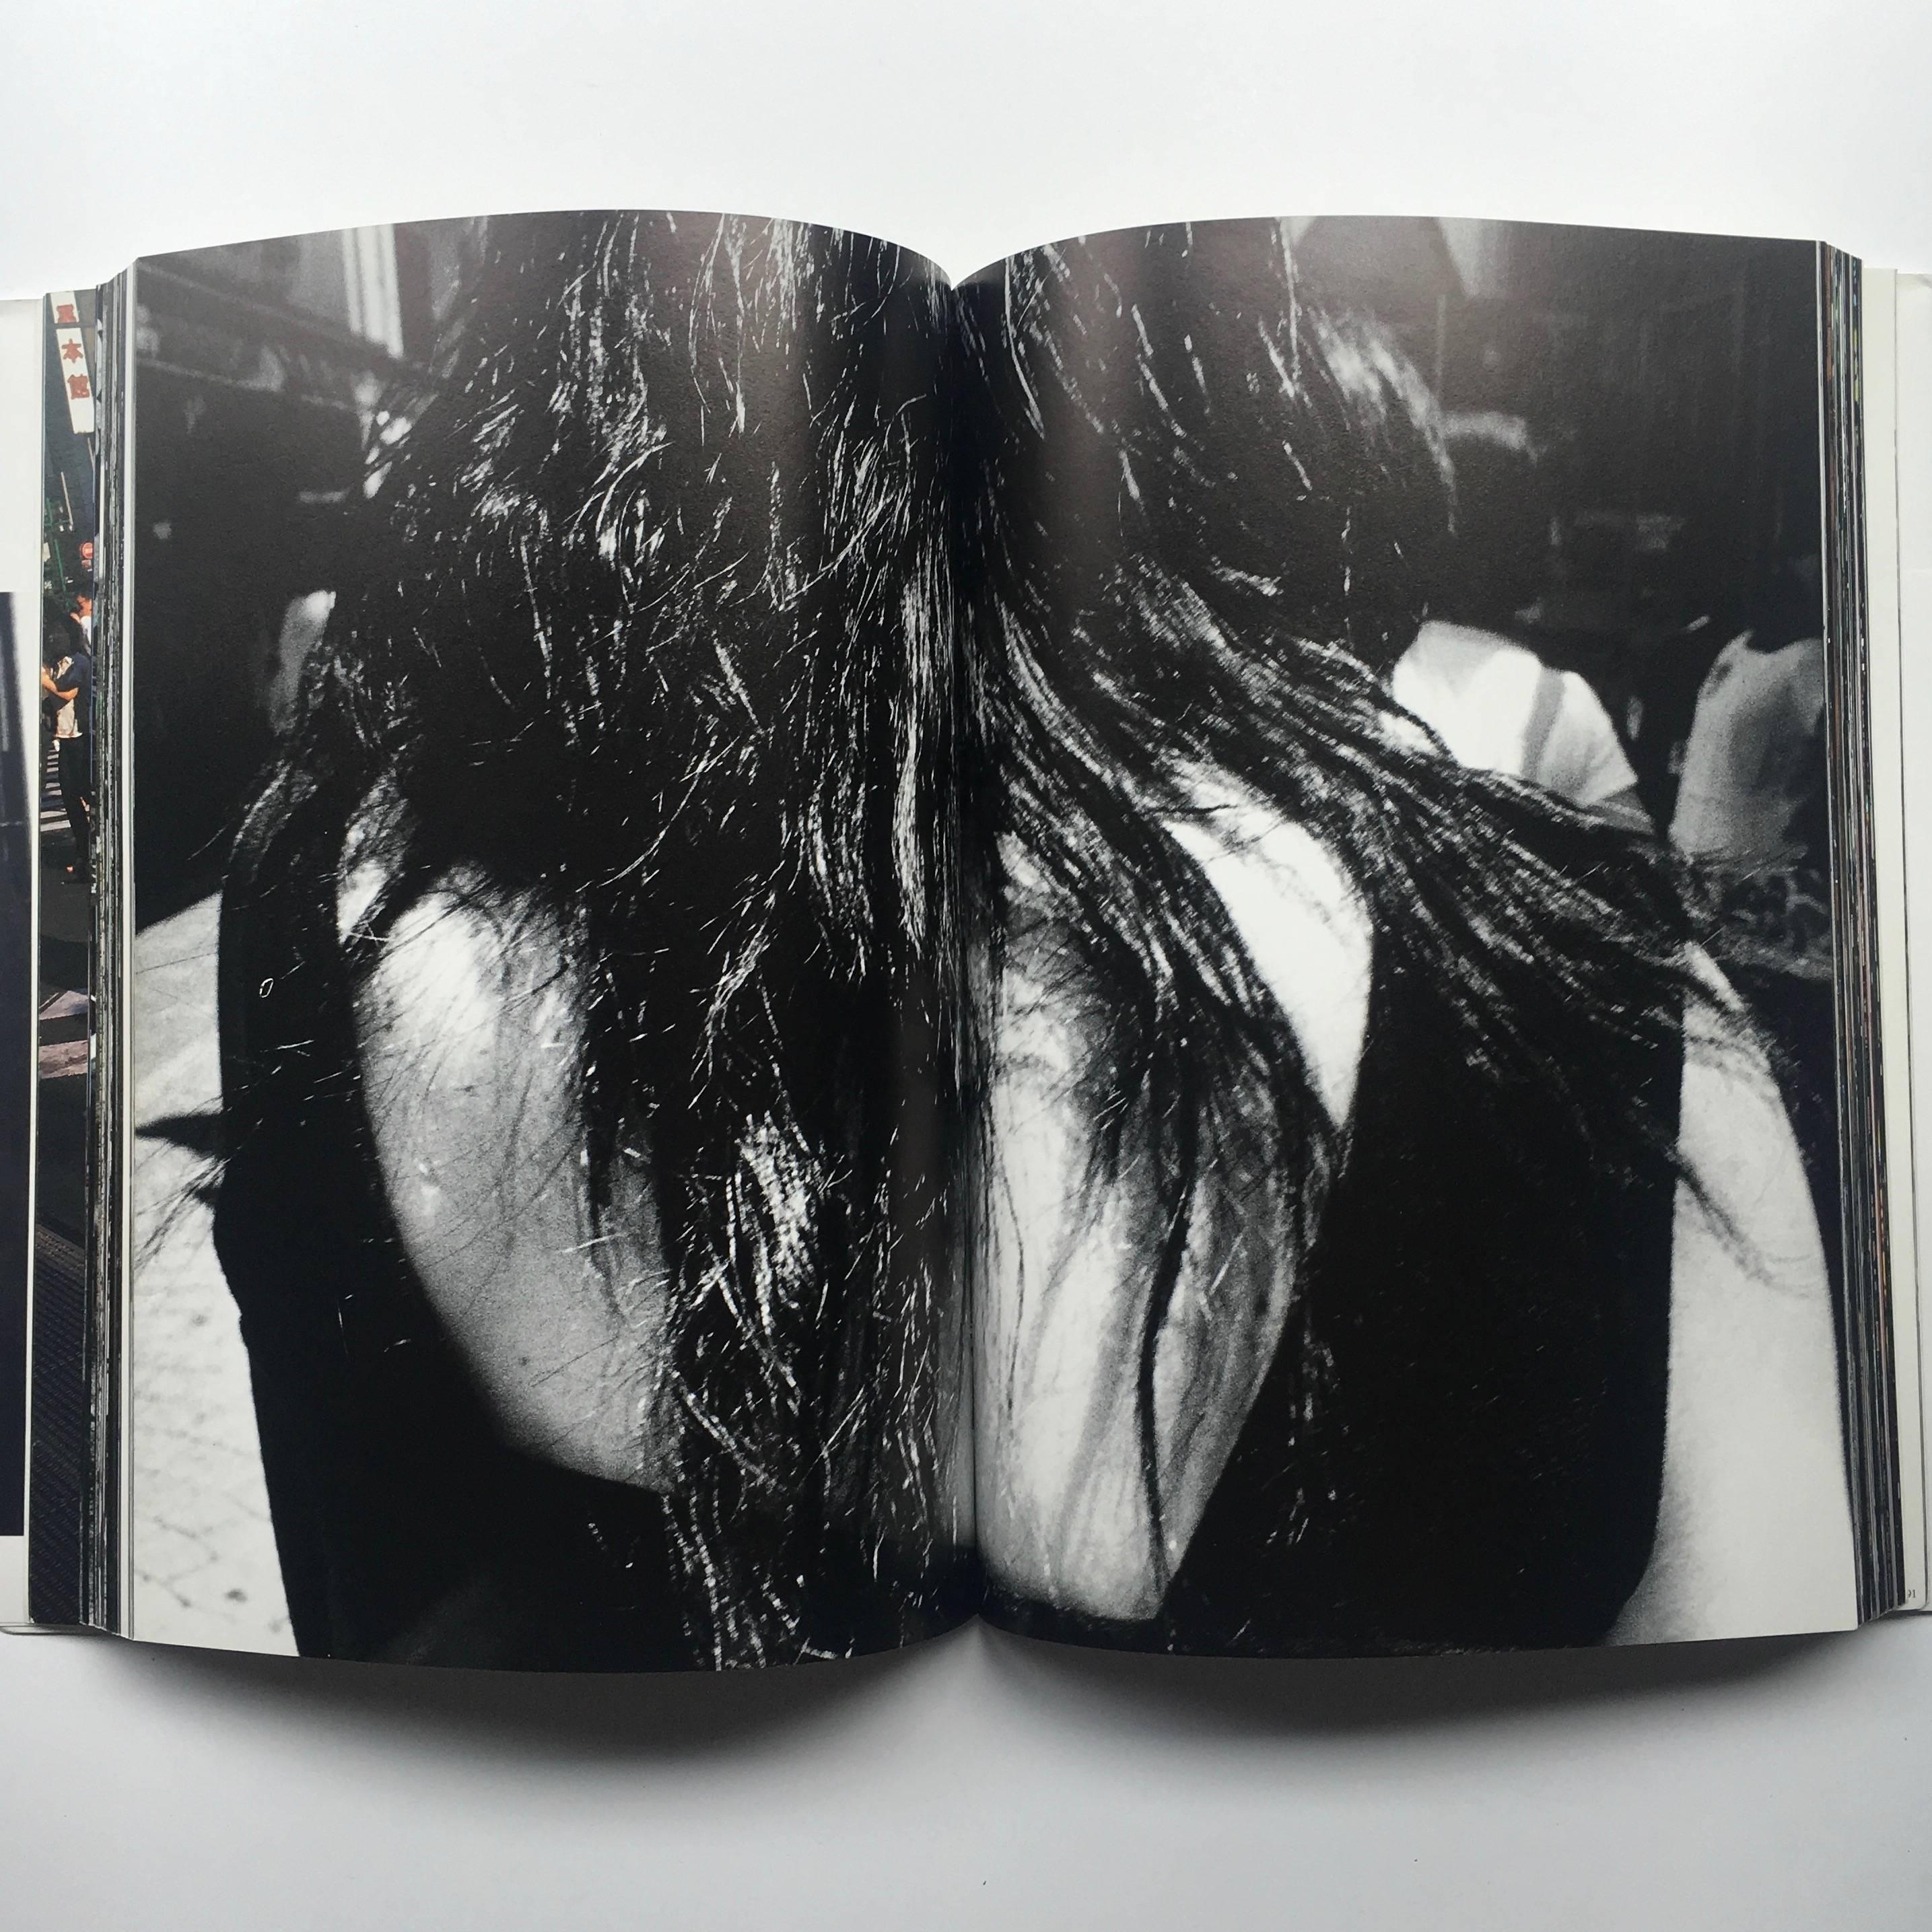 Japanese Moriyama, Shinjuku, Araki - Daido Moriyama, Nobuyoshi Araki - 1st Edition, 2005